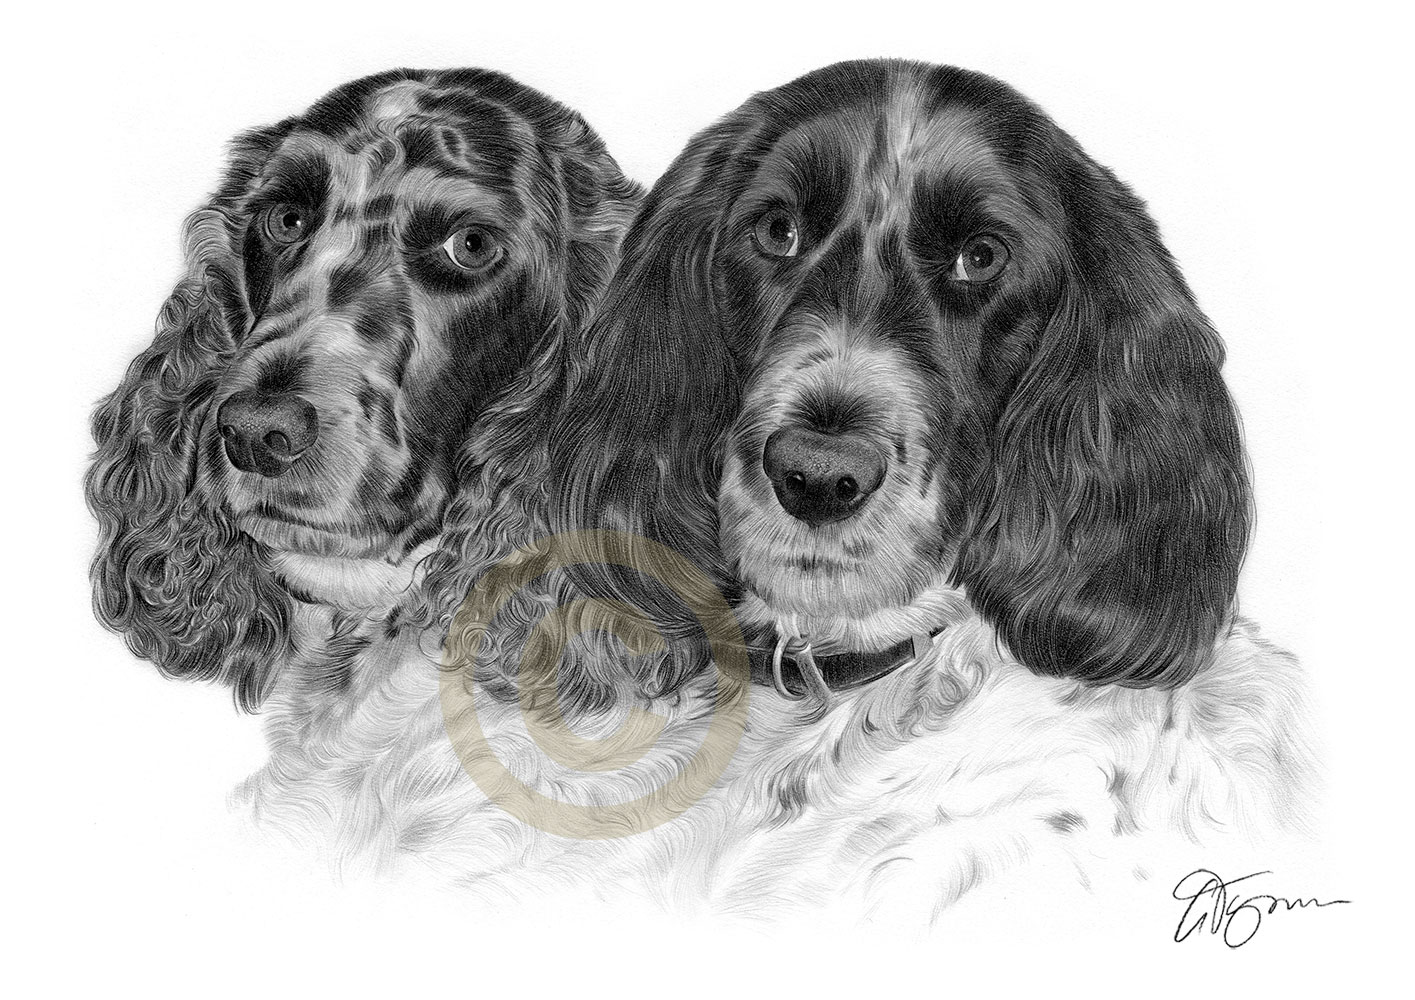 Pet portrait commission of Milo and Bracken by artist Gary Tymon